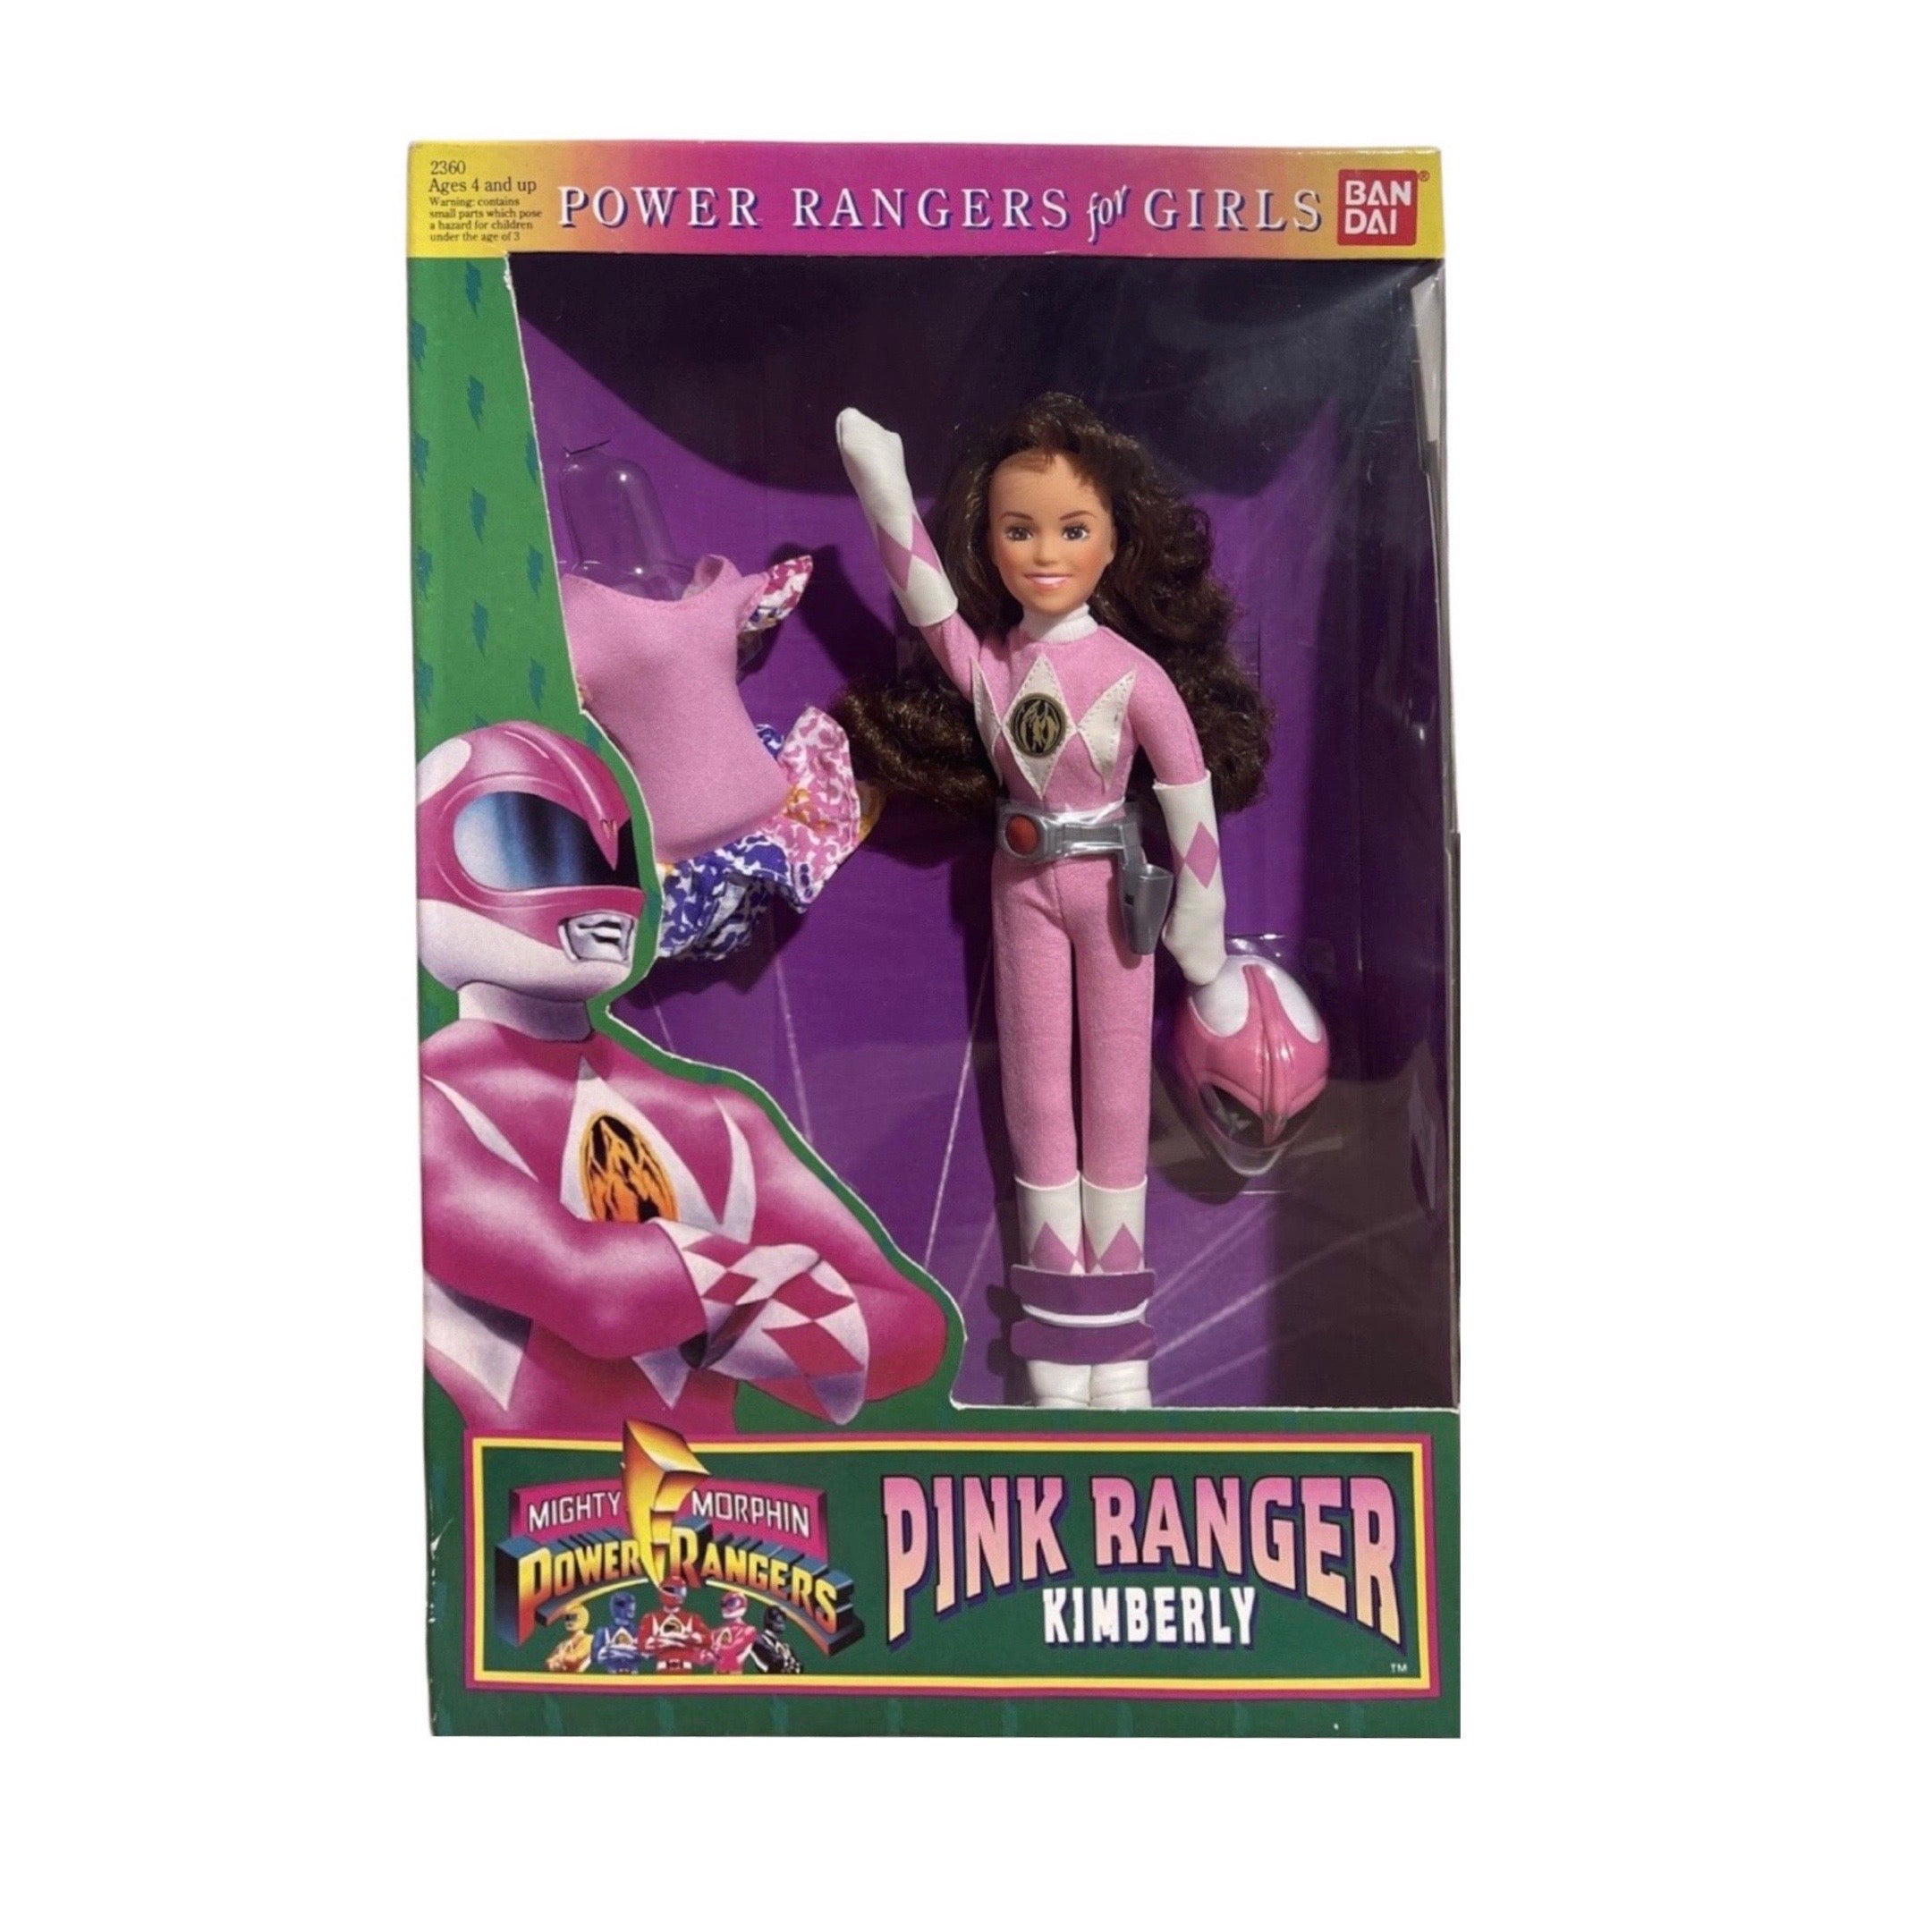 Vintage Power Rangers | Kimberly the Pink Ranger